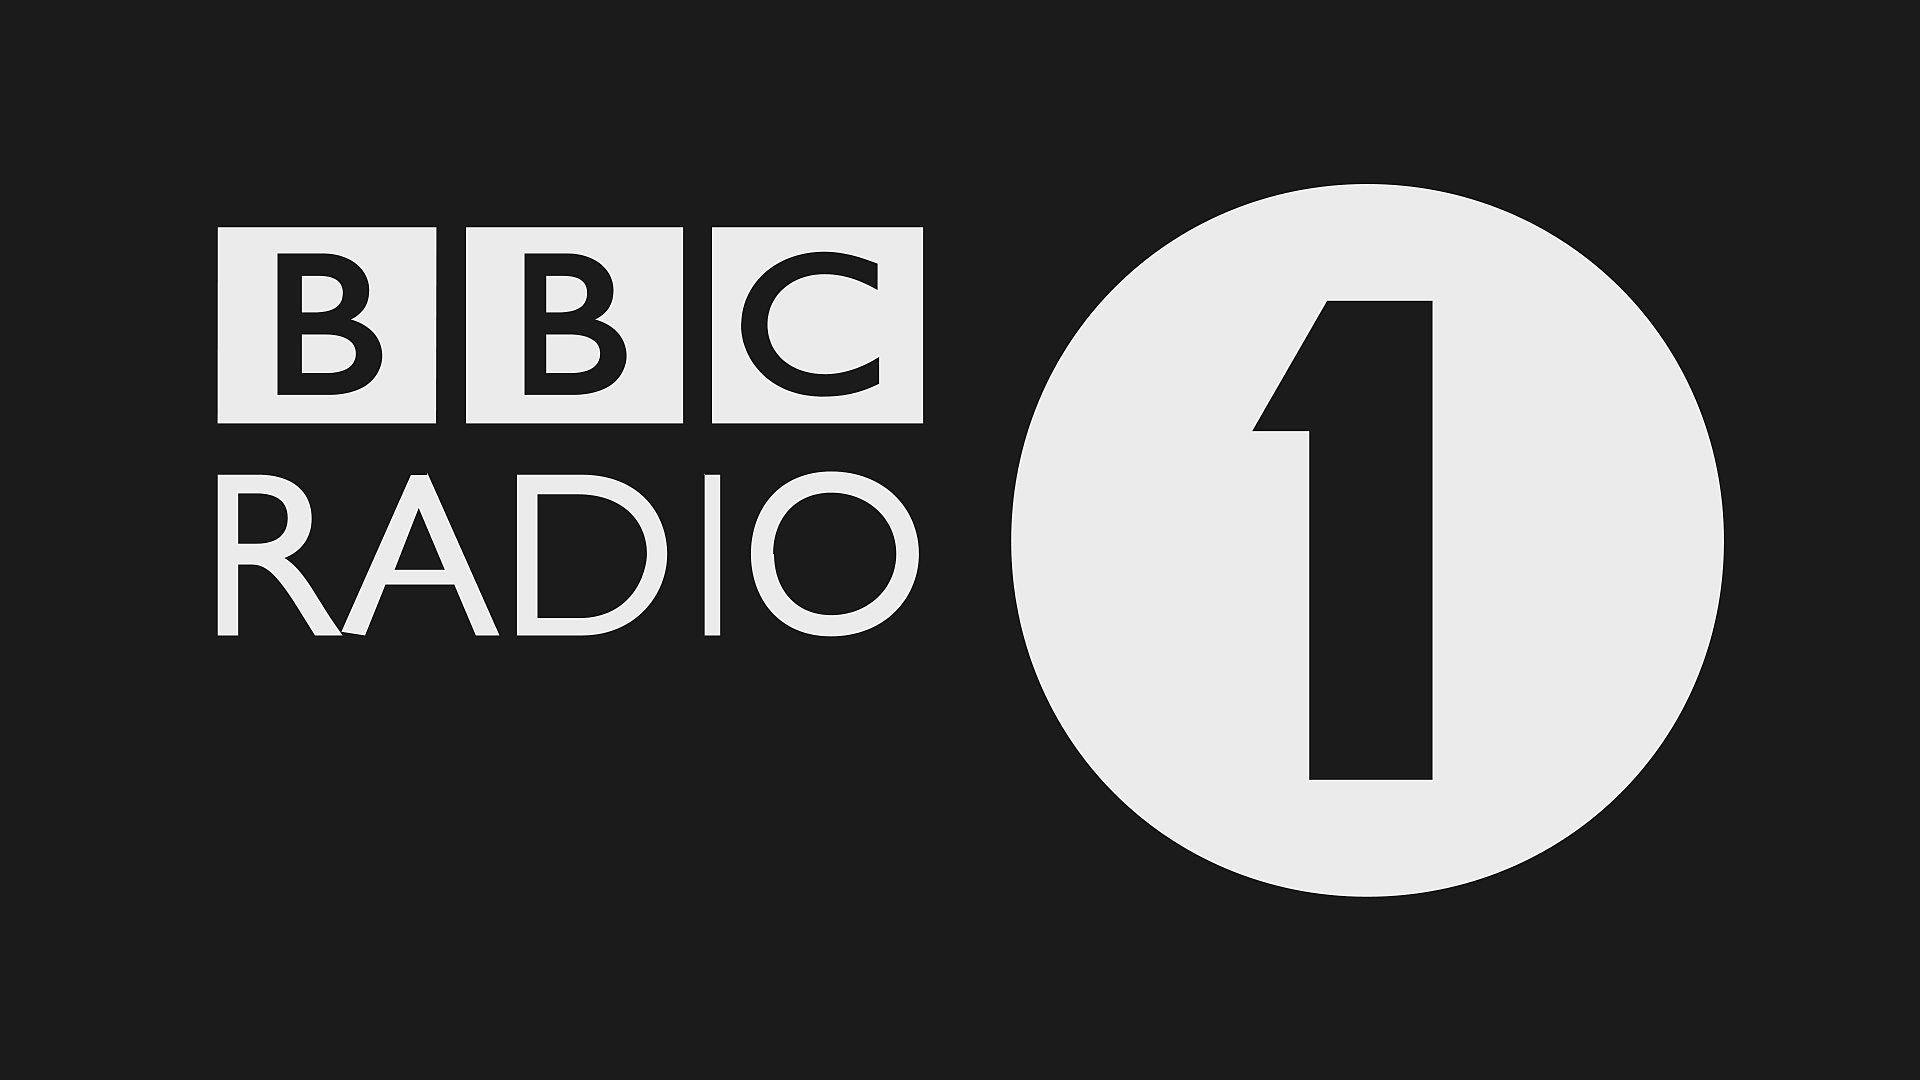 Bbcr1 Logo - BBC - Radio 1 Playlist